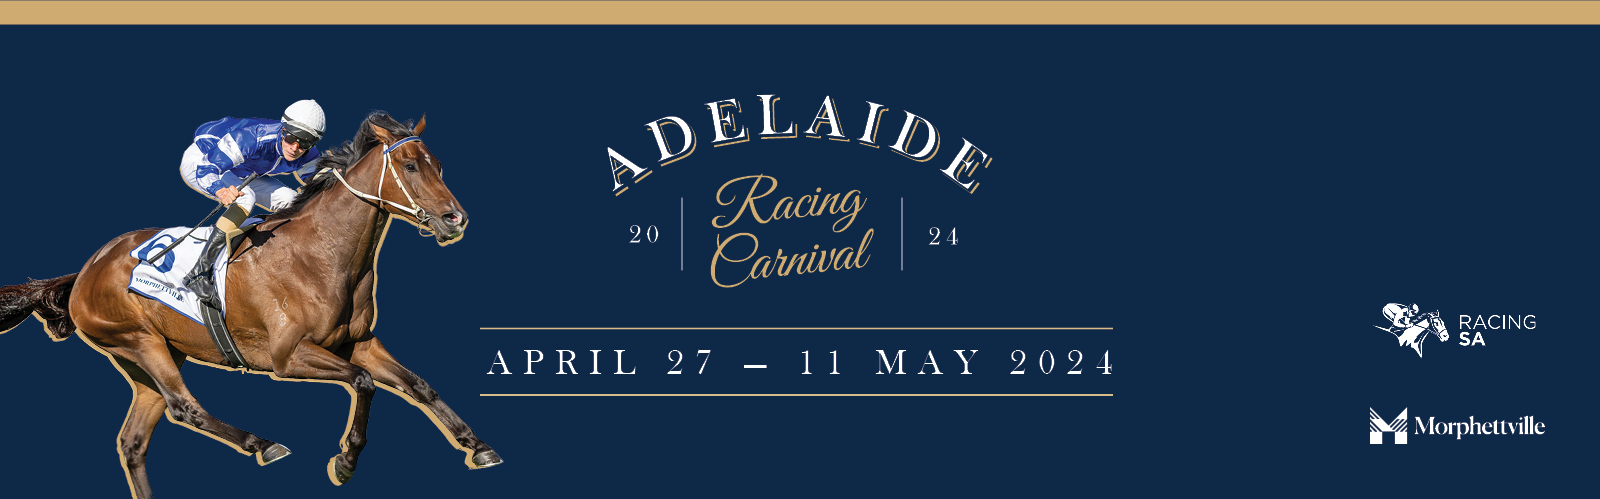 Adelaide Racing Carnival web banner 2024